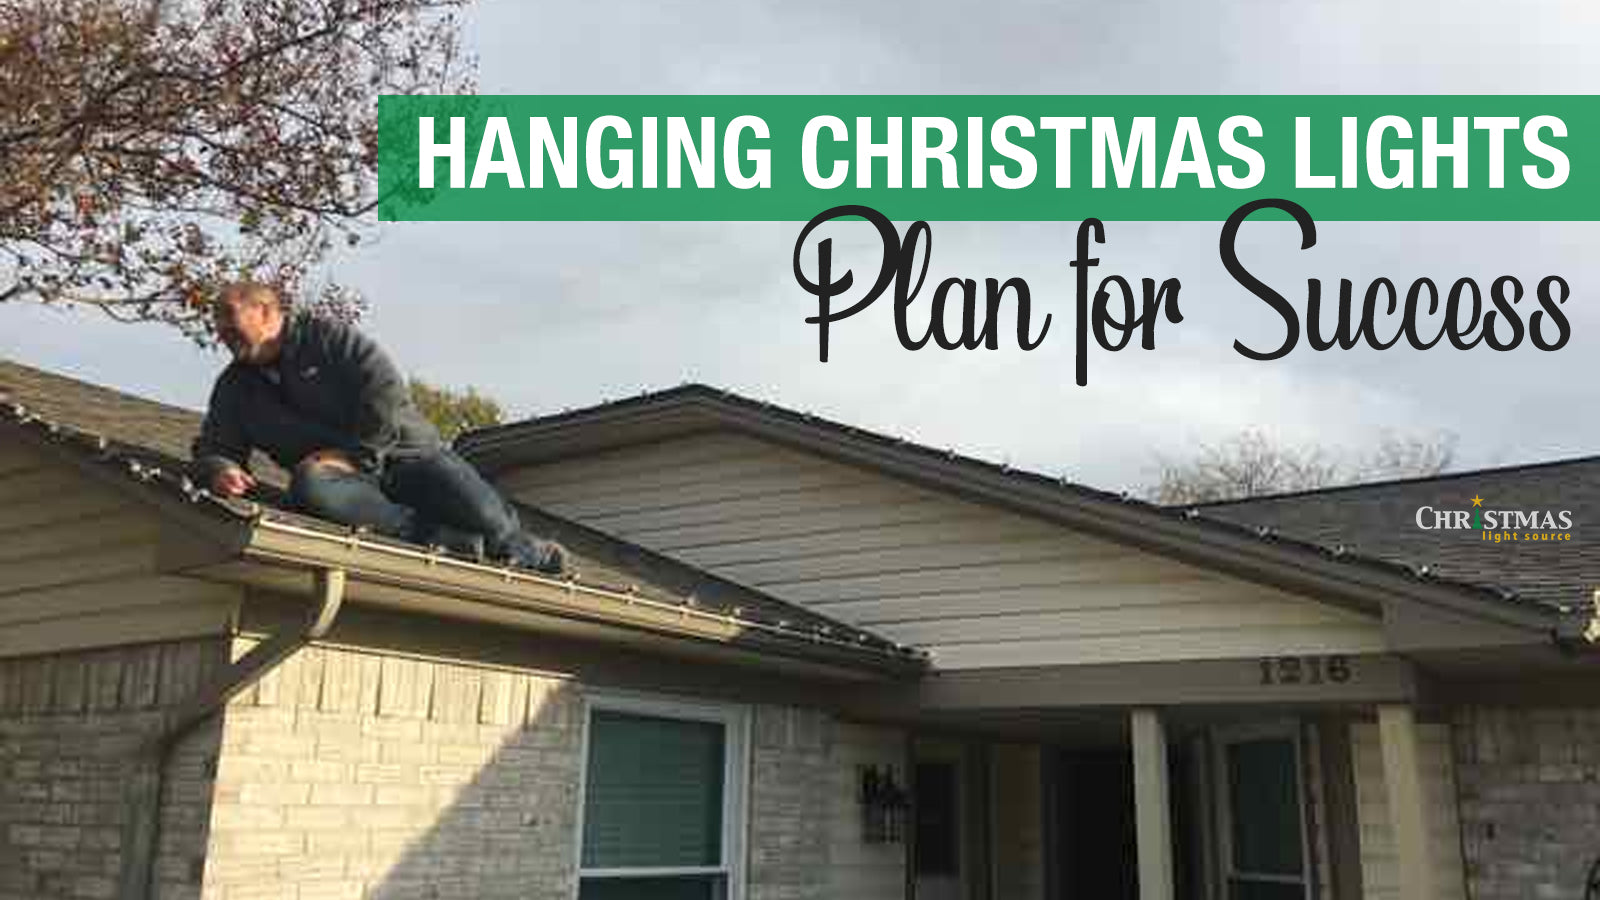 Hanging Christmas Lights - Plan for success